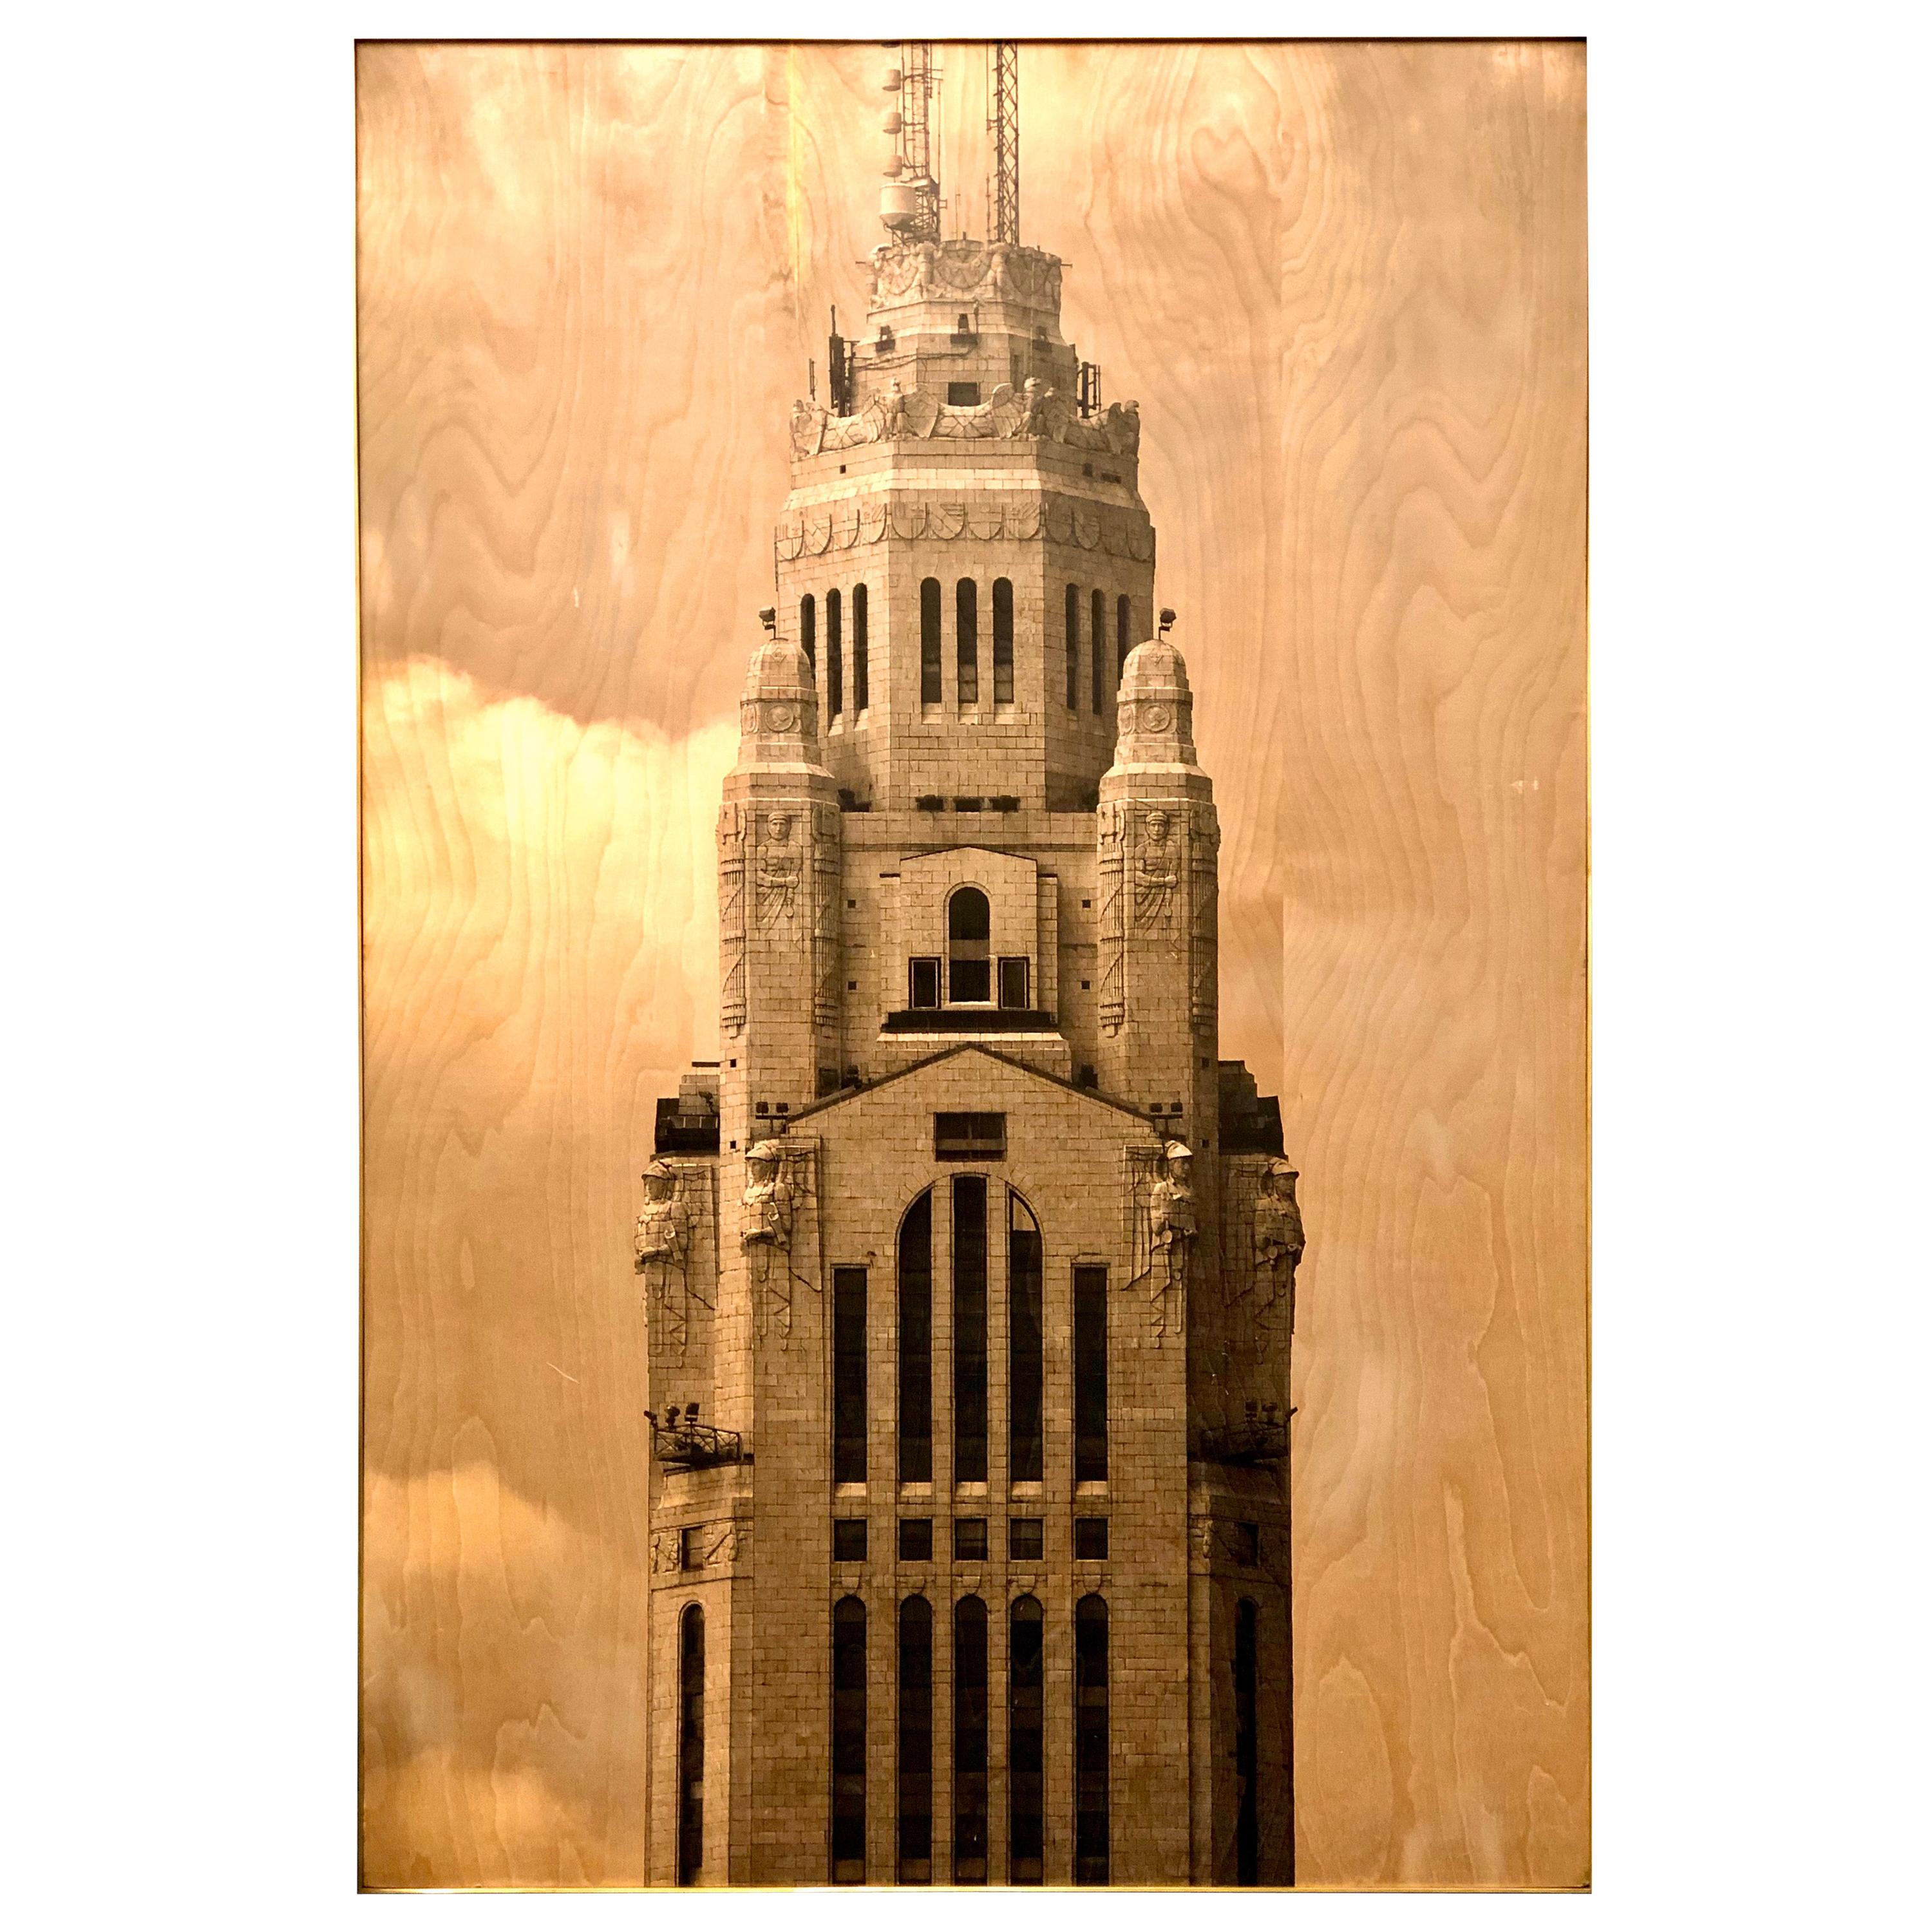 Fototransfer auf Holz mit Messingrahmen:: Leveque-Turm im Angebot